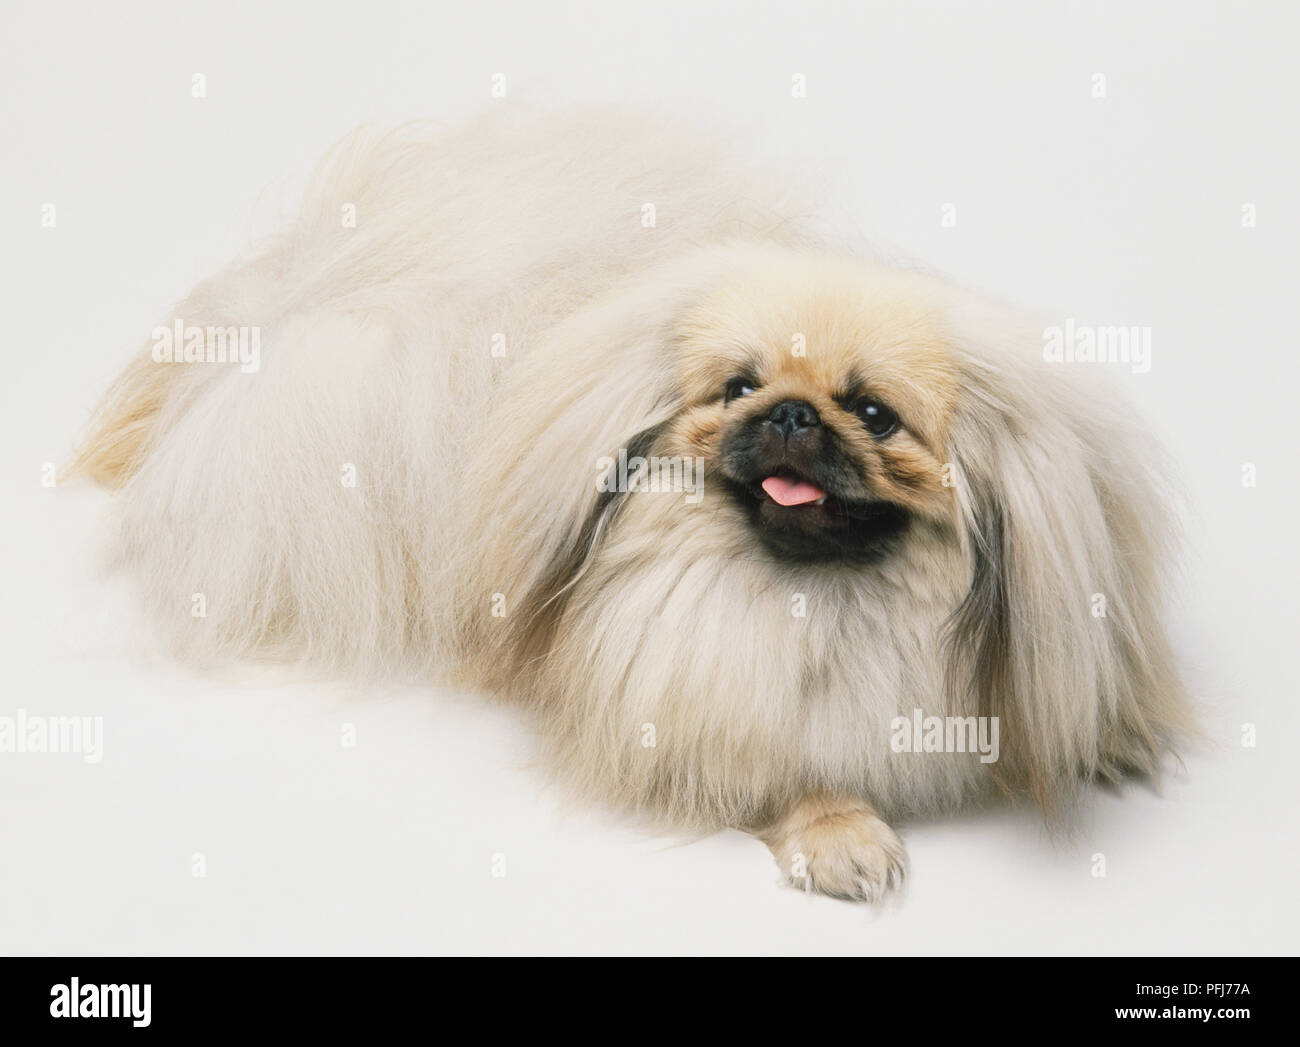 Pekingese, small dog with long fur. Stock Photo